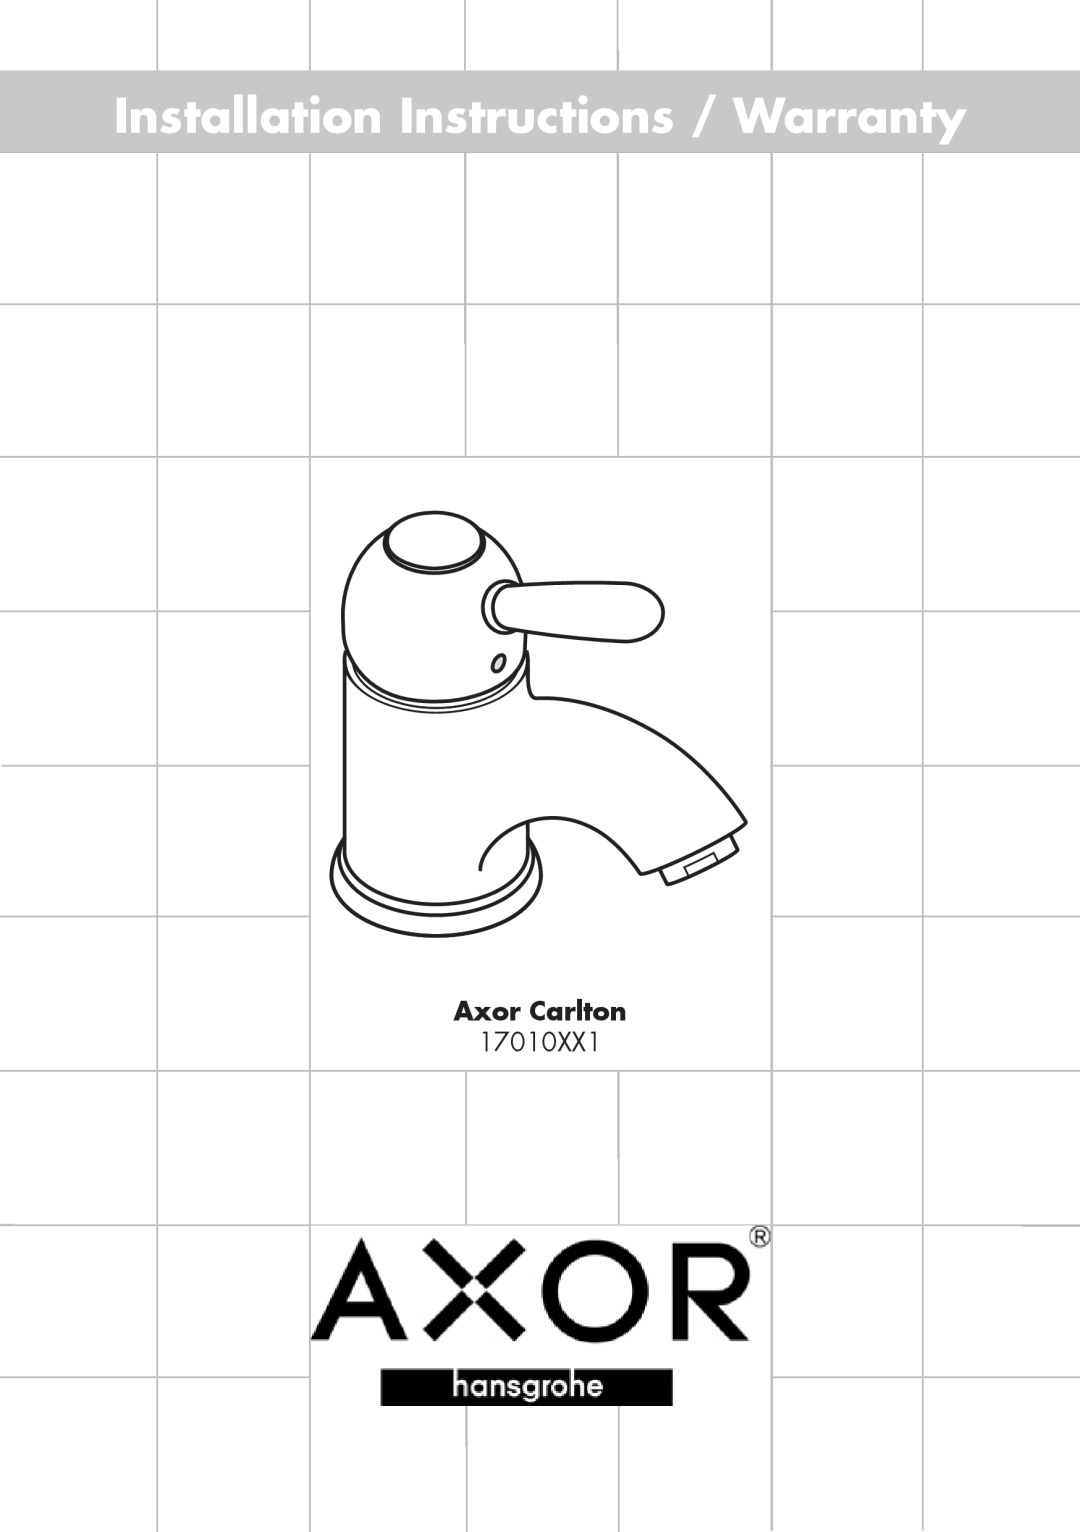 Hans Grohe 17010XX1 installation instructions Axor Carlton, Installation Instructions / Warranty 